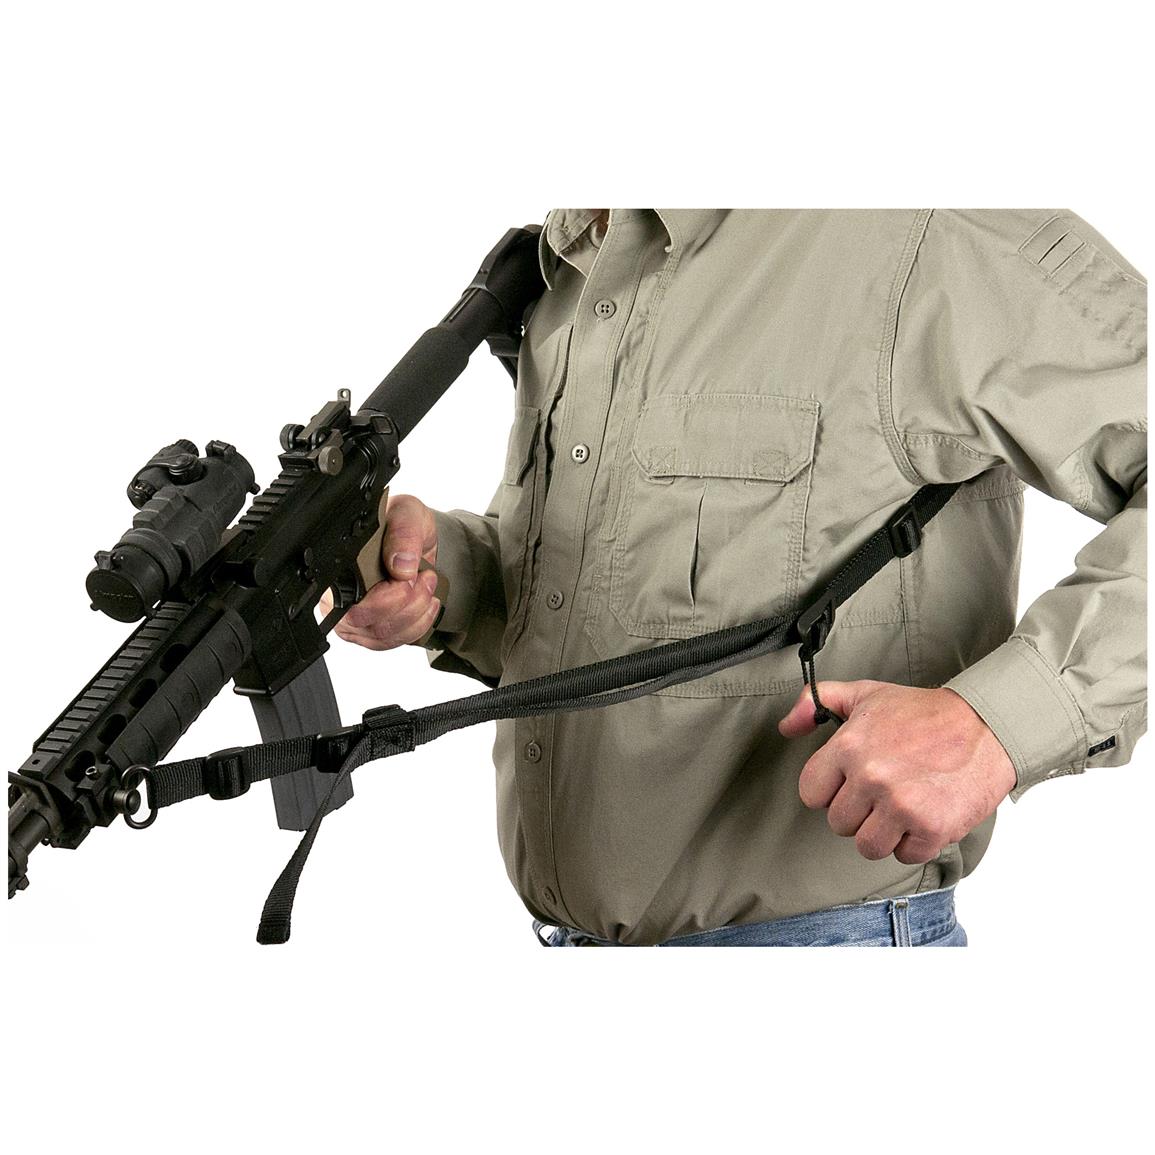 Vero Vellini® Tactical 2 Point Sling 633510 Gun Slings At Sportsman S Guide